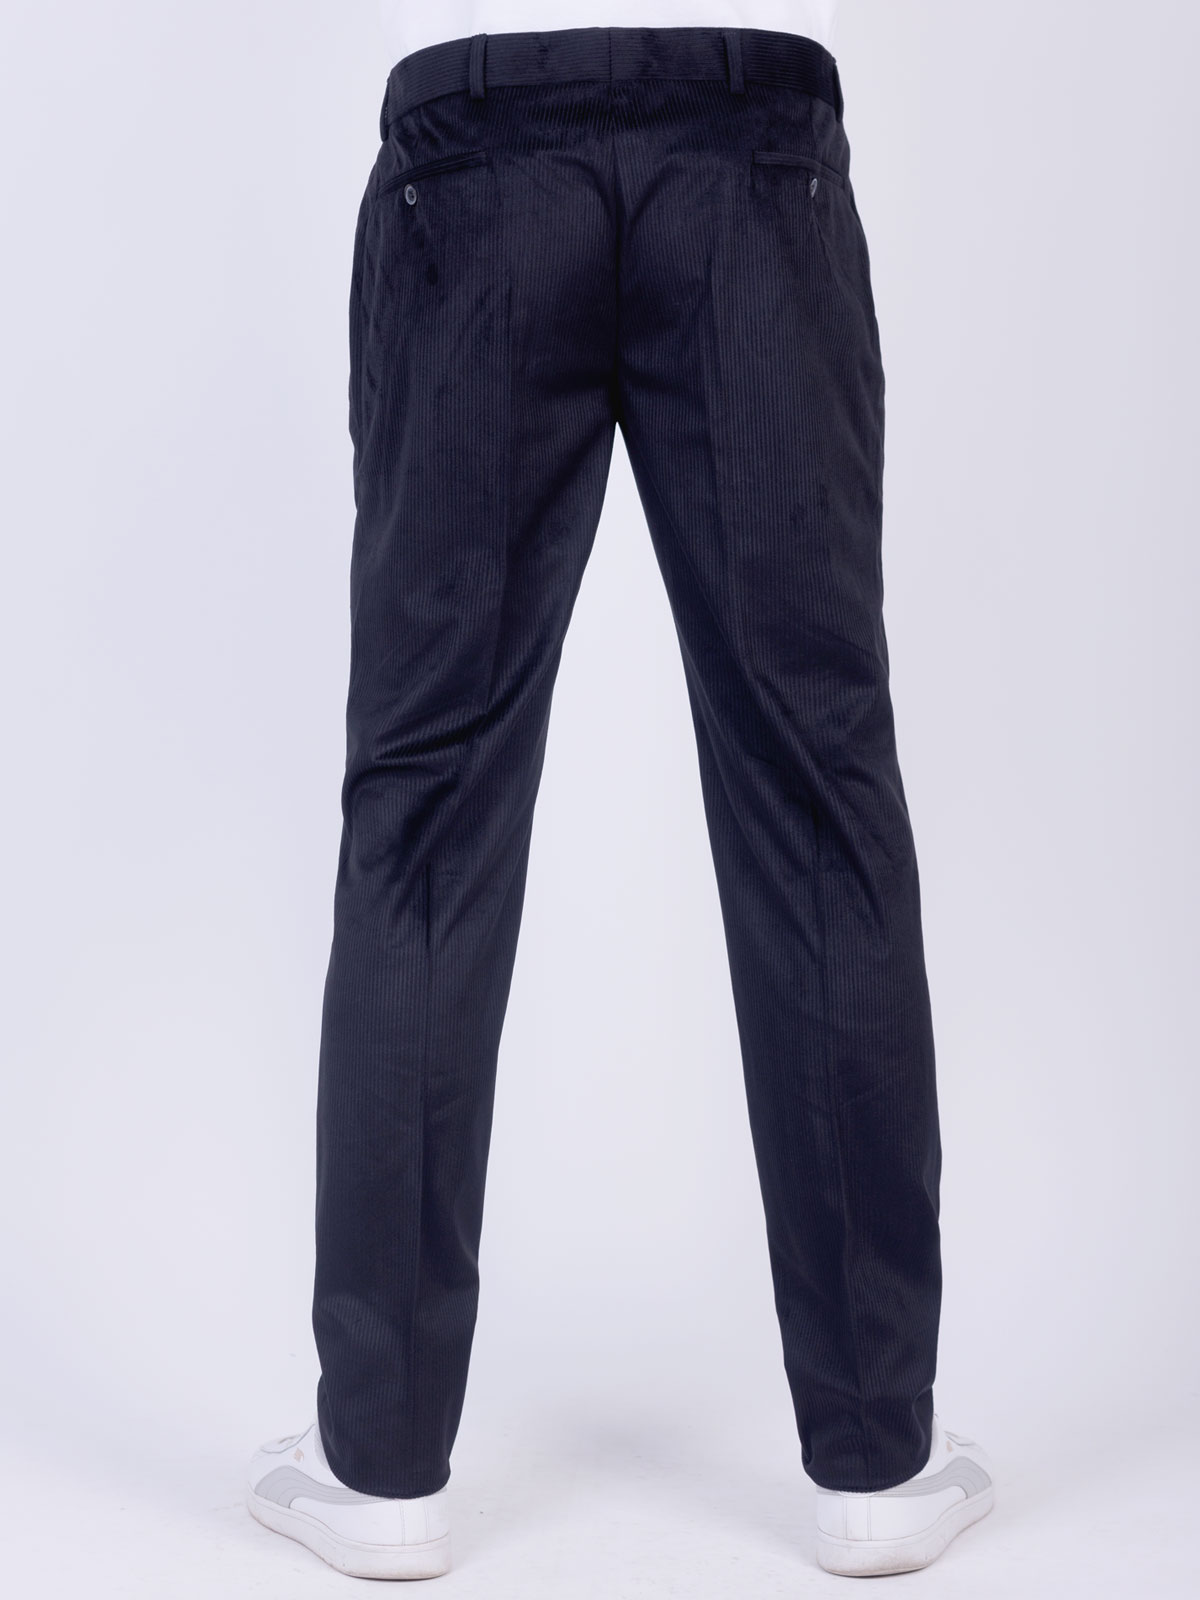 Pantaloni bărbați cu dungi negre - 60231 € 44.43 img2